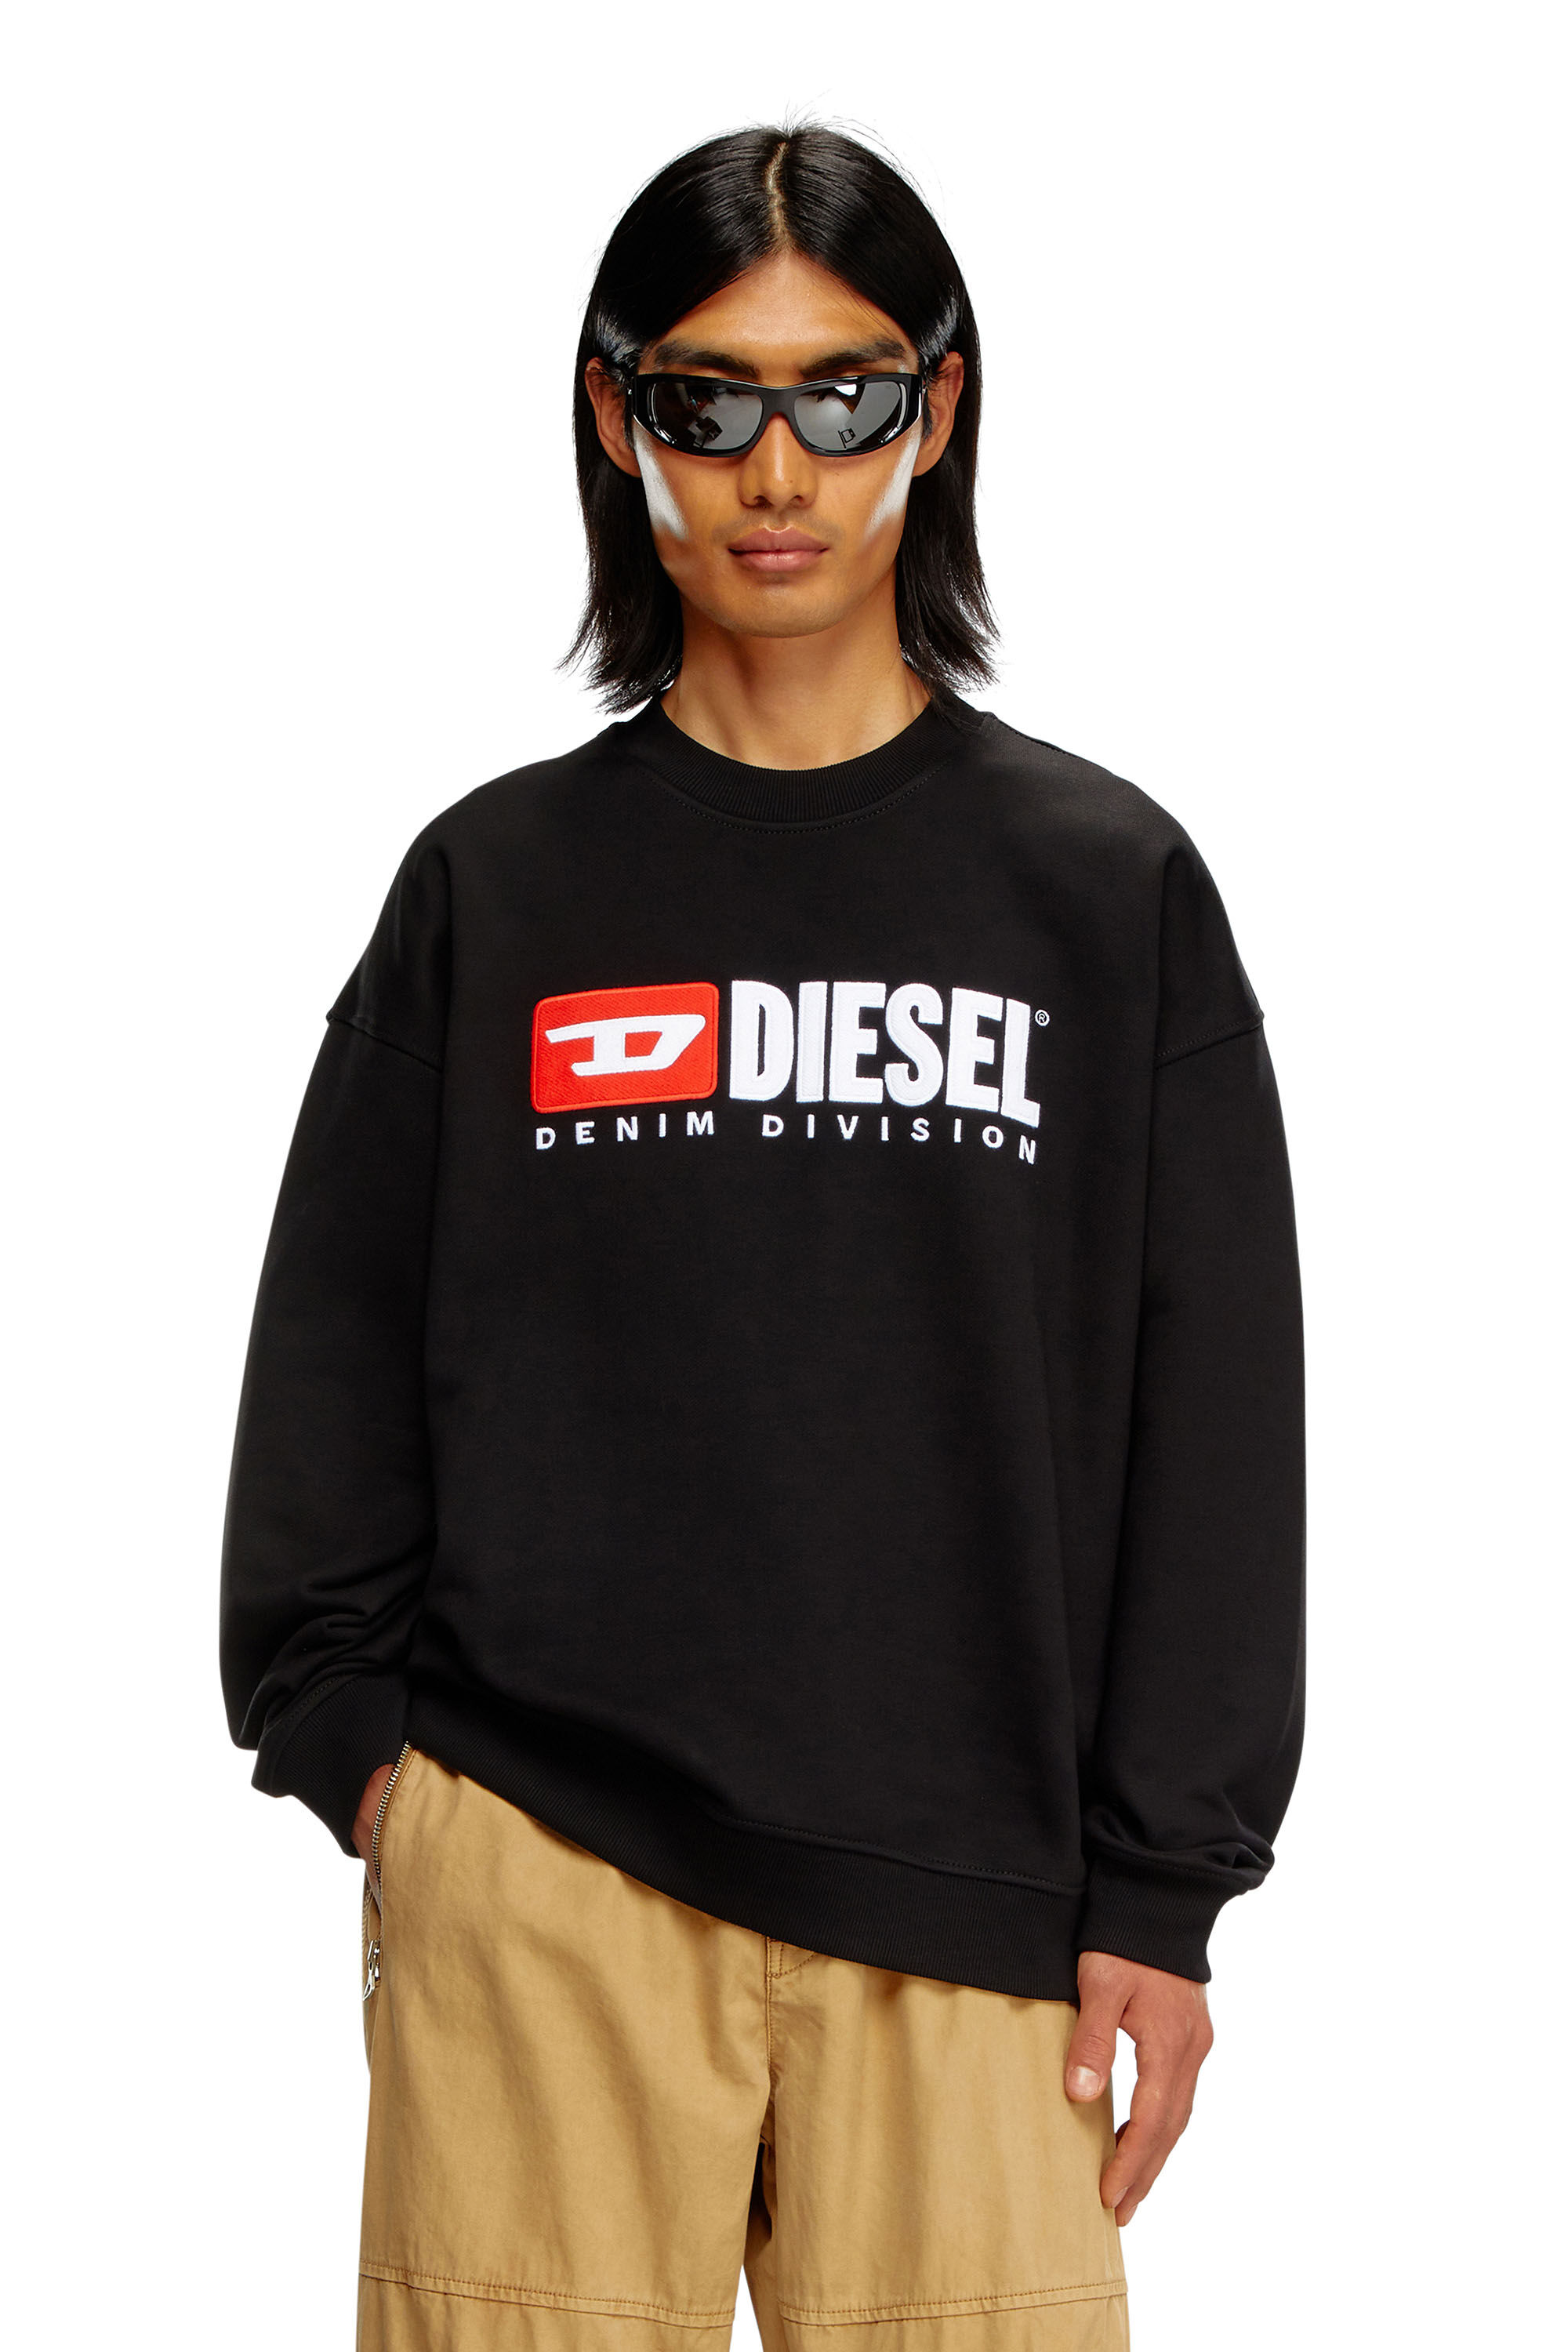 Diesel - S-BOXT-DIV, Man Sweatshirt with Denim Division logo in Black - Image 3